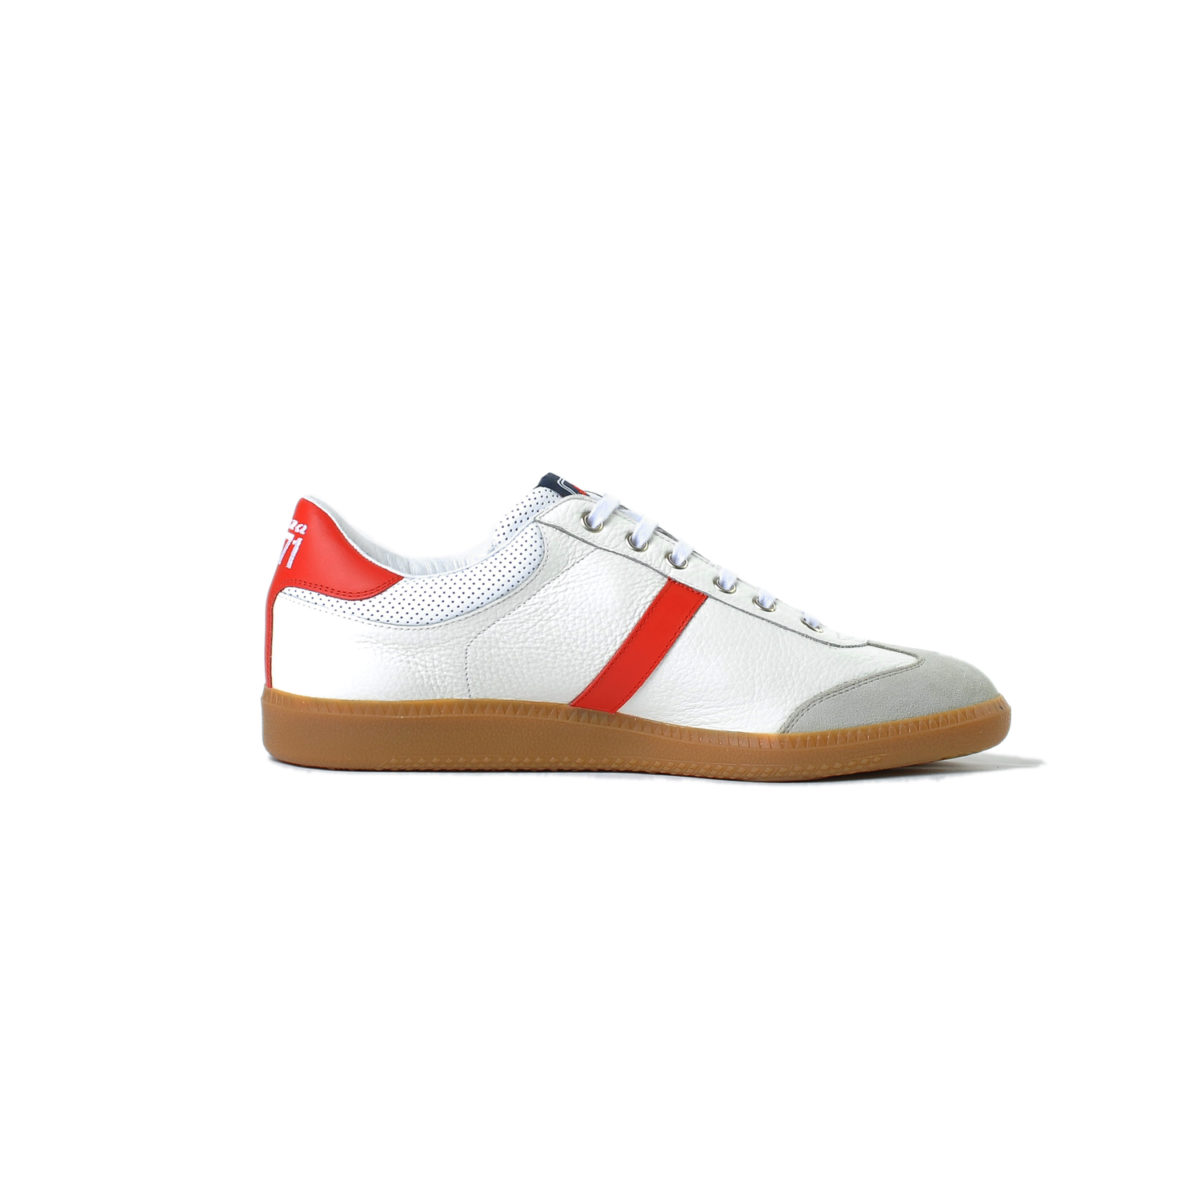 Tisza shoes - Compakt - White-classic-jubileum